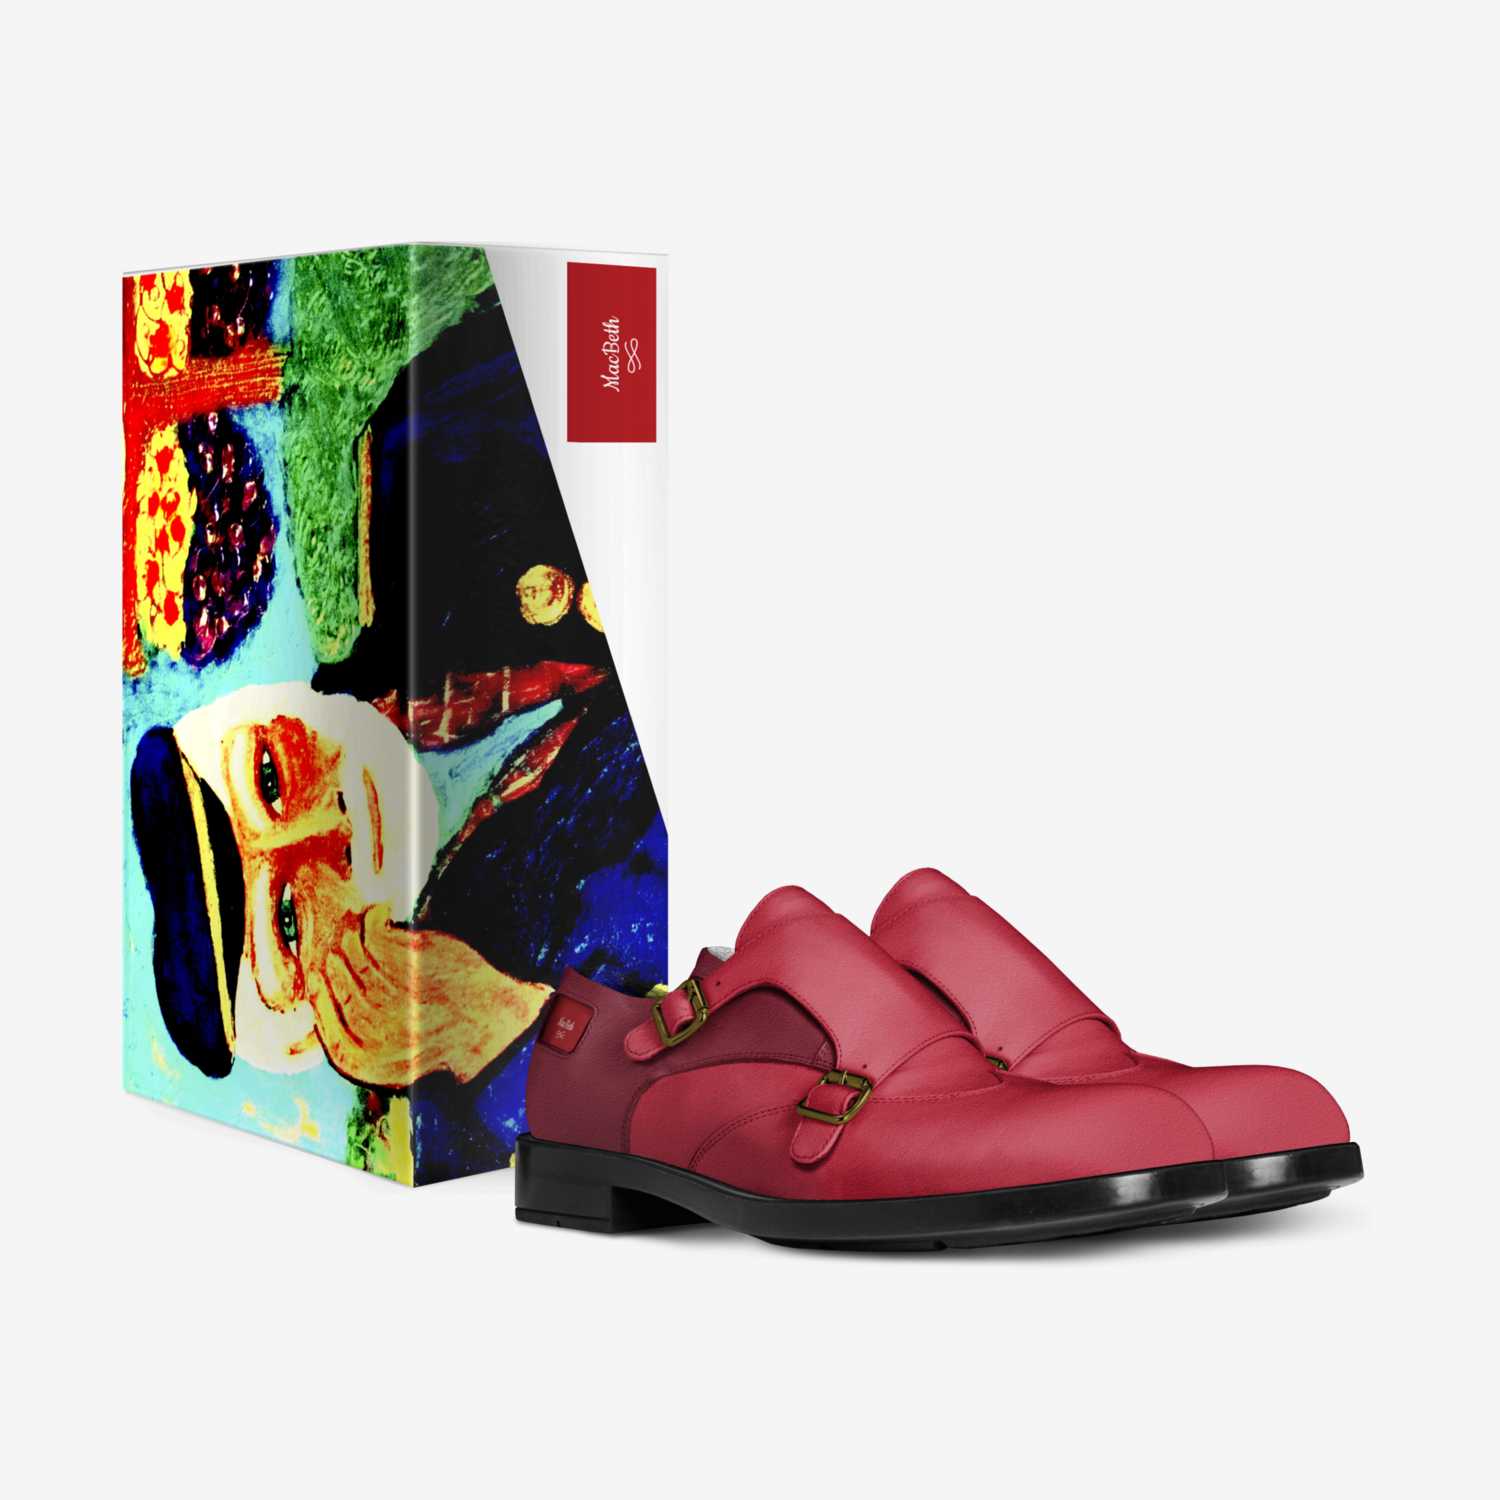 MacBeth custom made in Italy shoes by Lauretta Macbeth | Box view